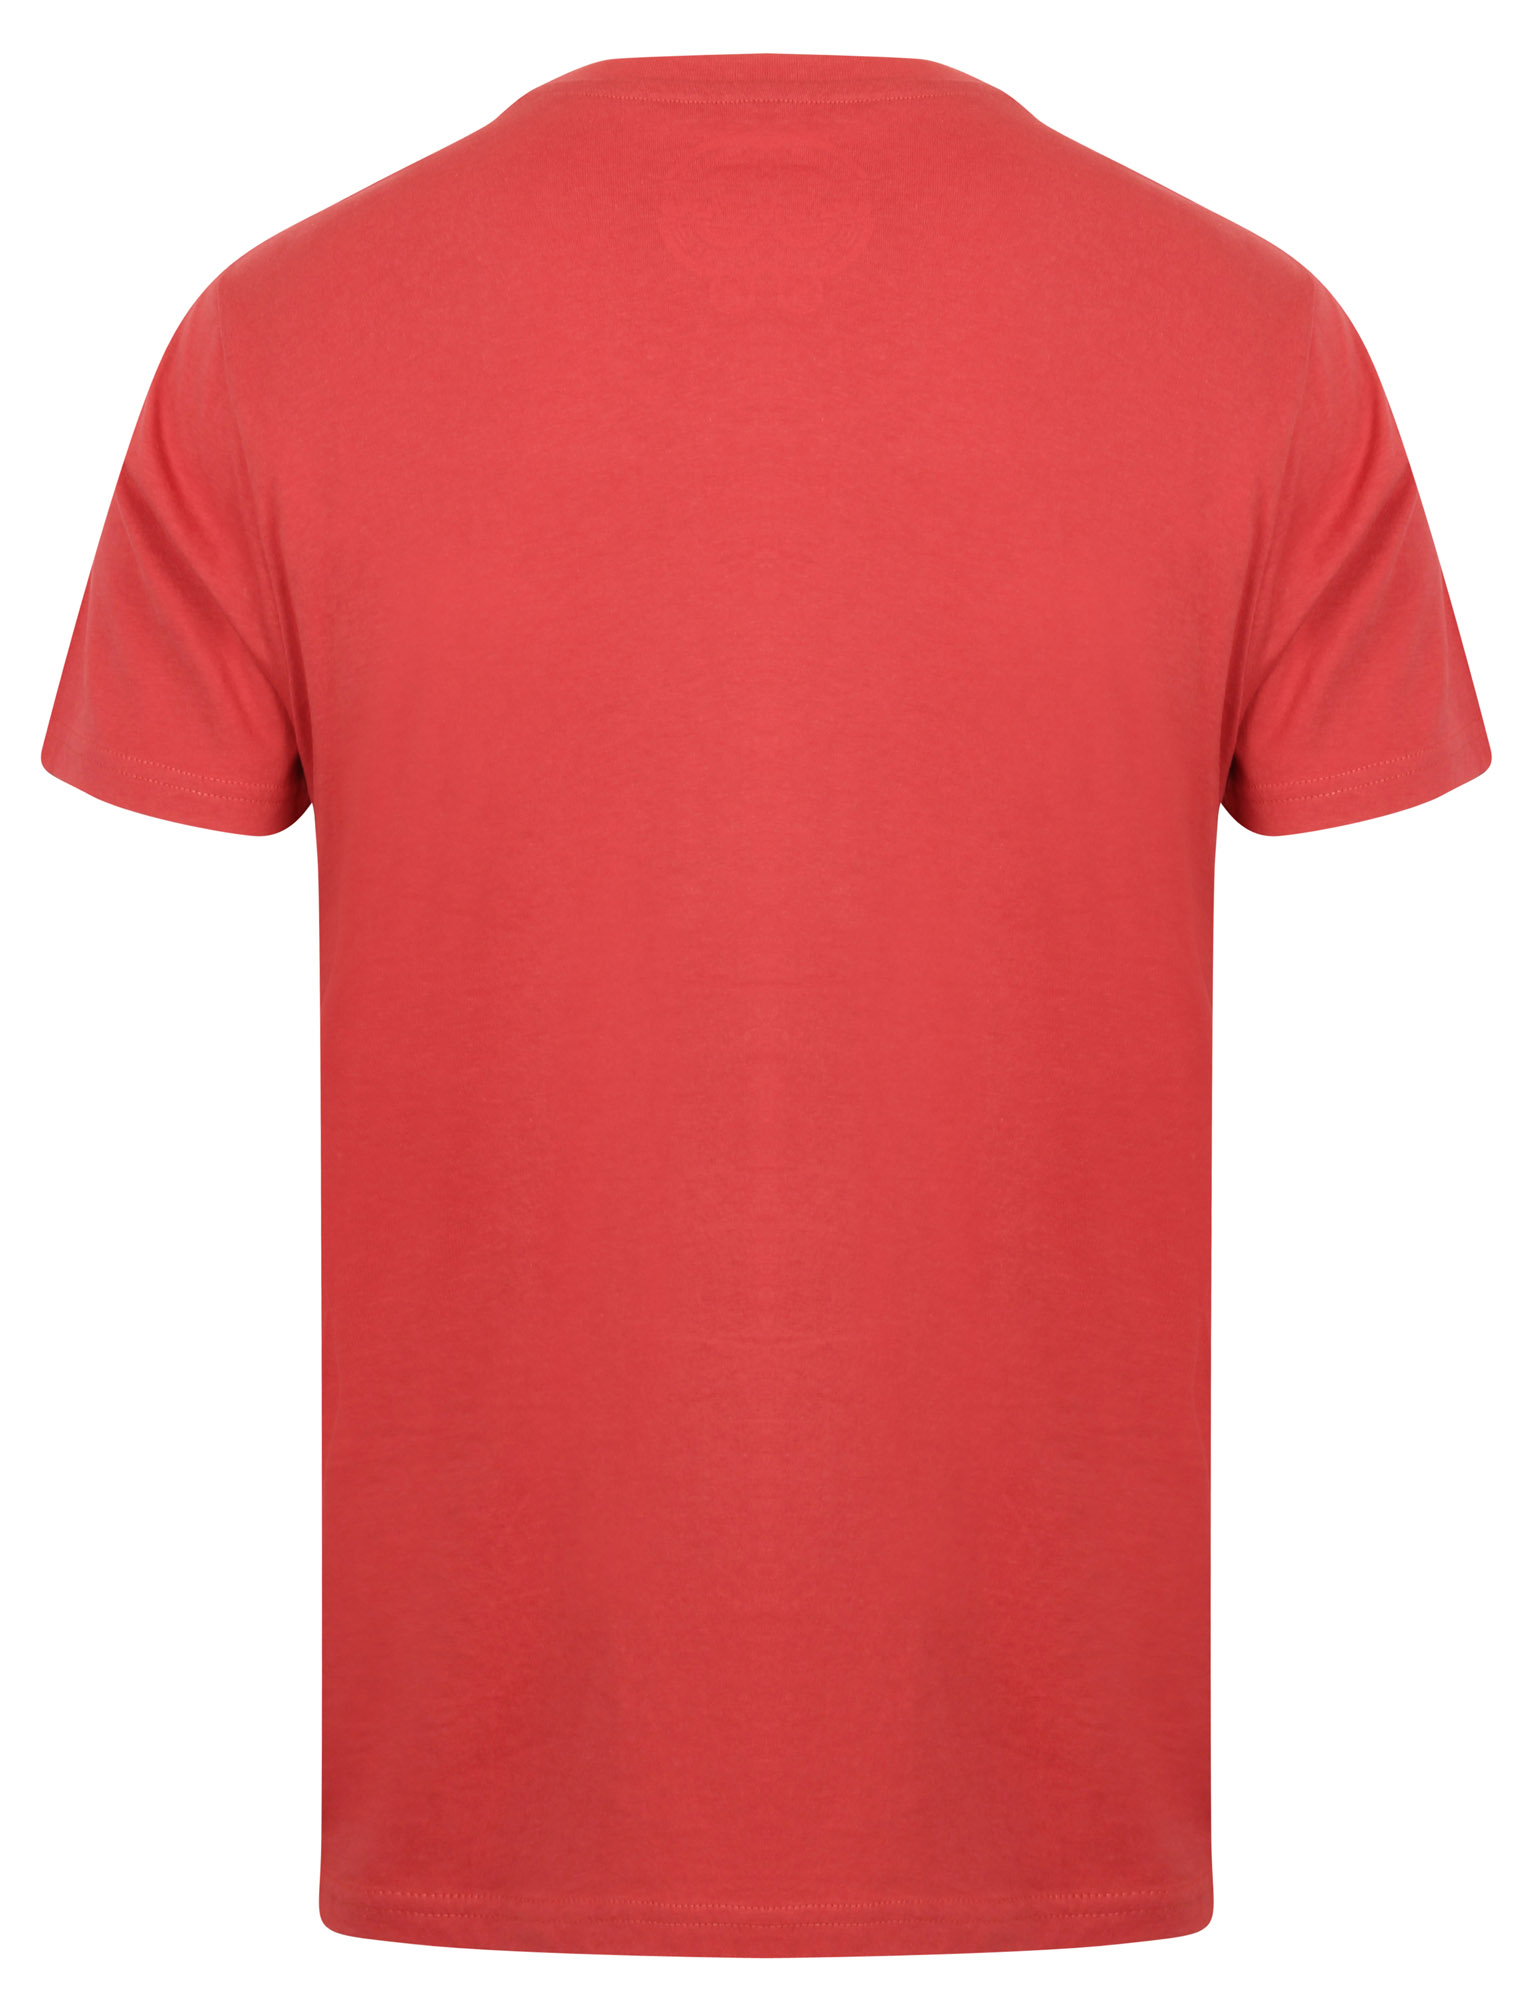 New Men's STH Shore Crew-Neck Short Sleeve Casual T-shirt 